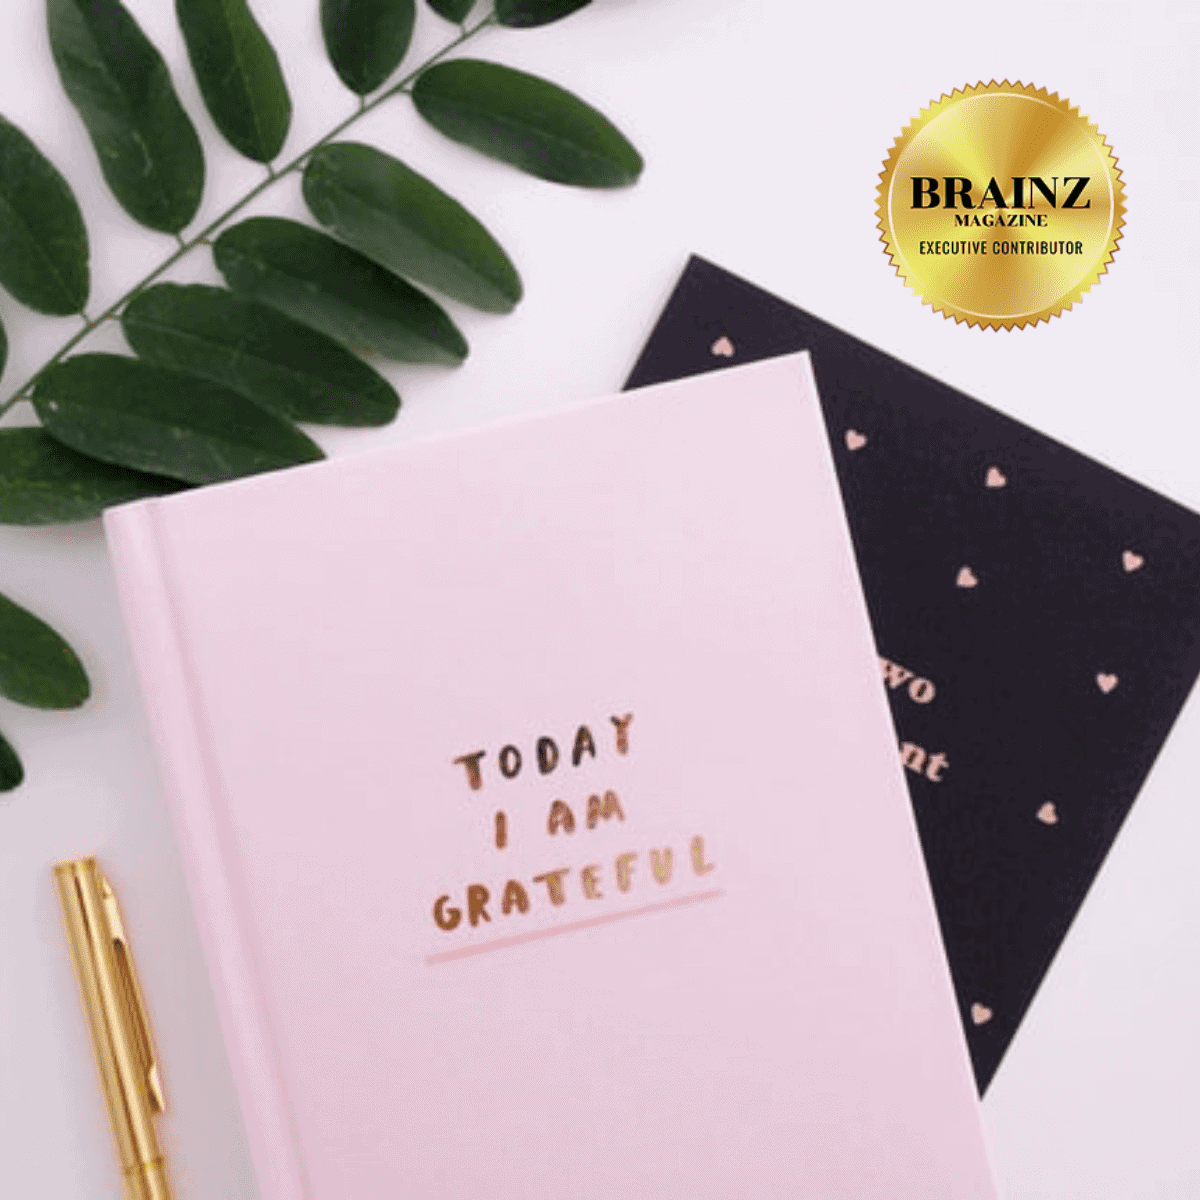 Gratitude journal - today I am grateful